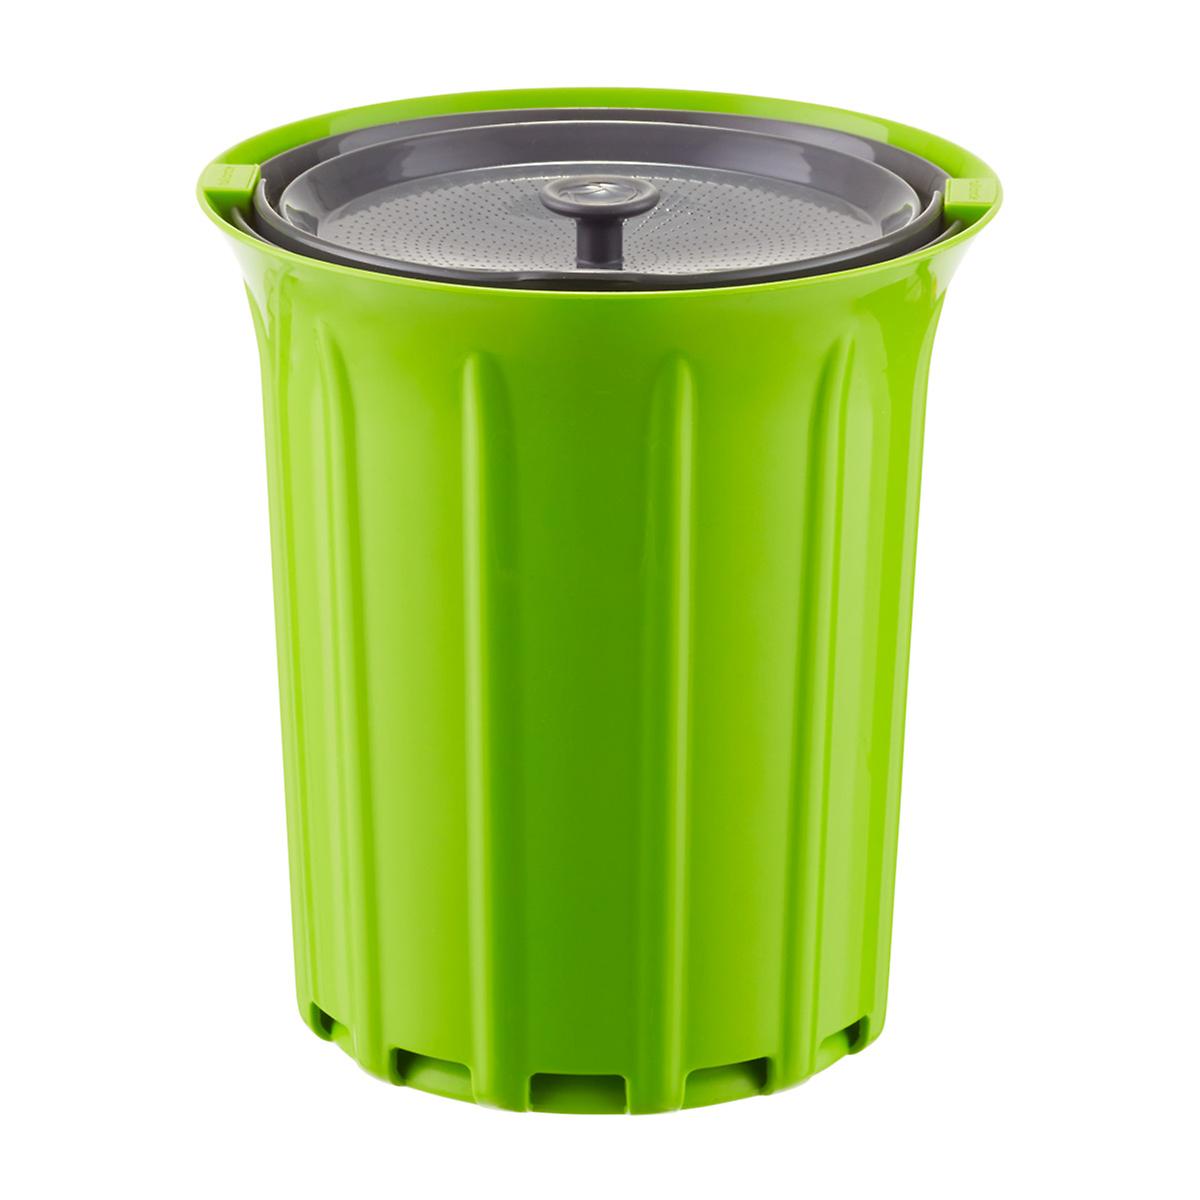 Full Circle Breeze Green Countertop Compost Bin | The ...
